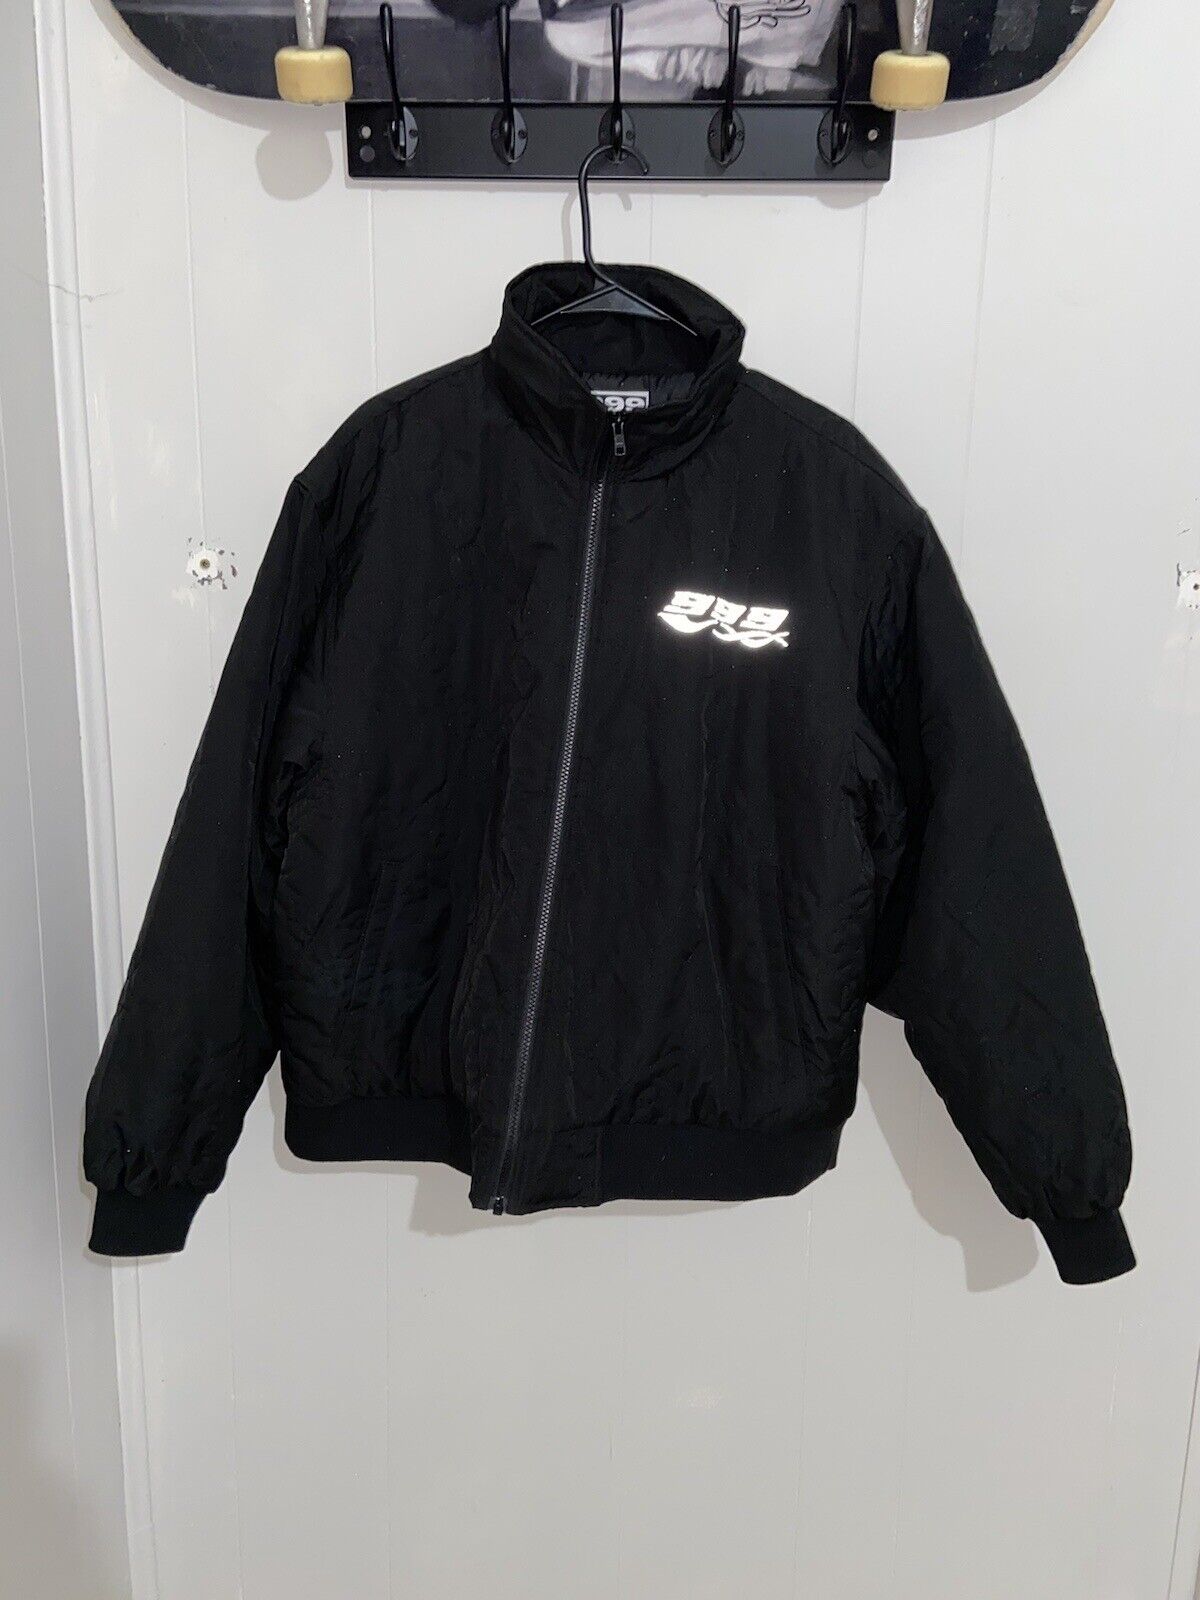 Juice WRLD Custom Black Bomber Jacket Men Size L 999 Life Limited Run